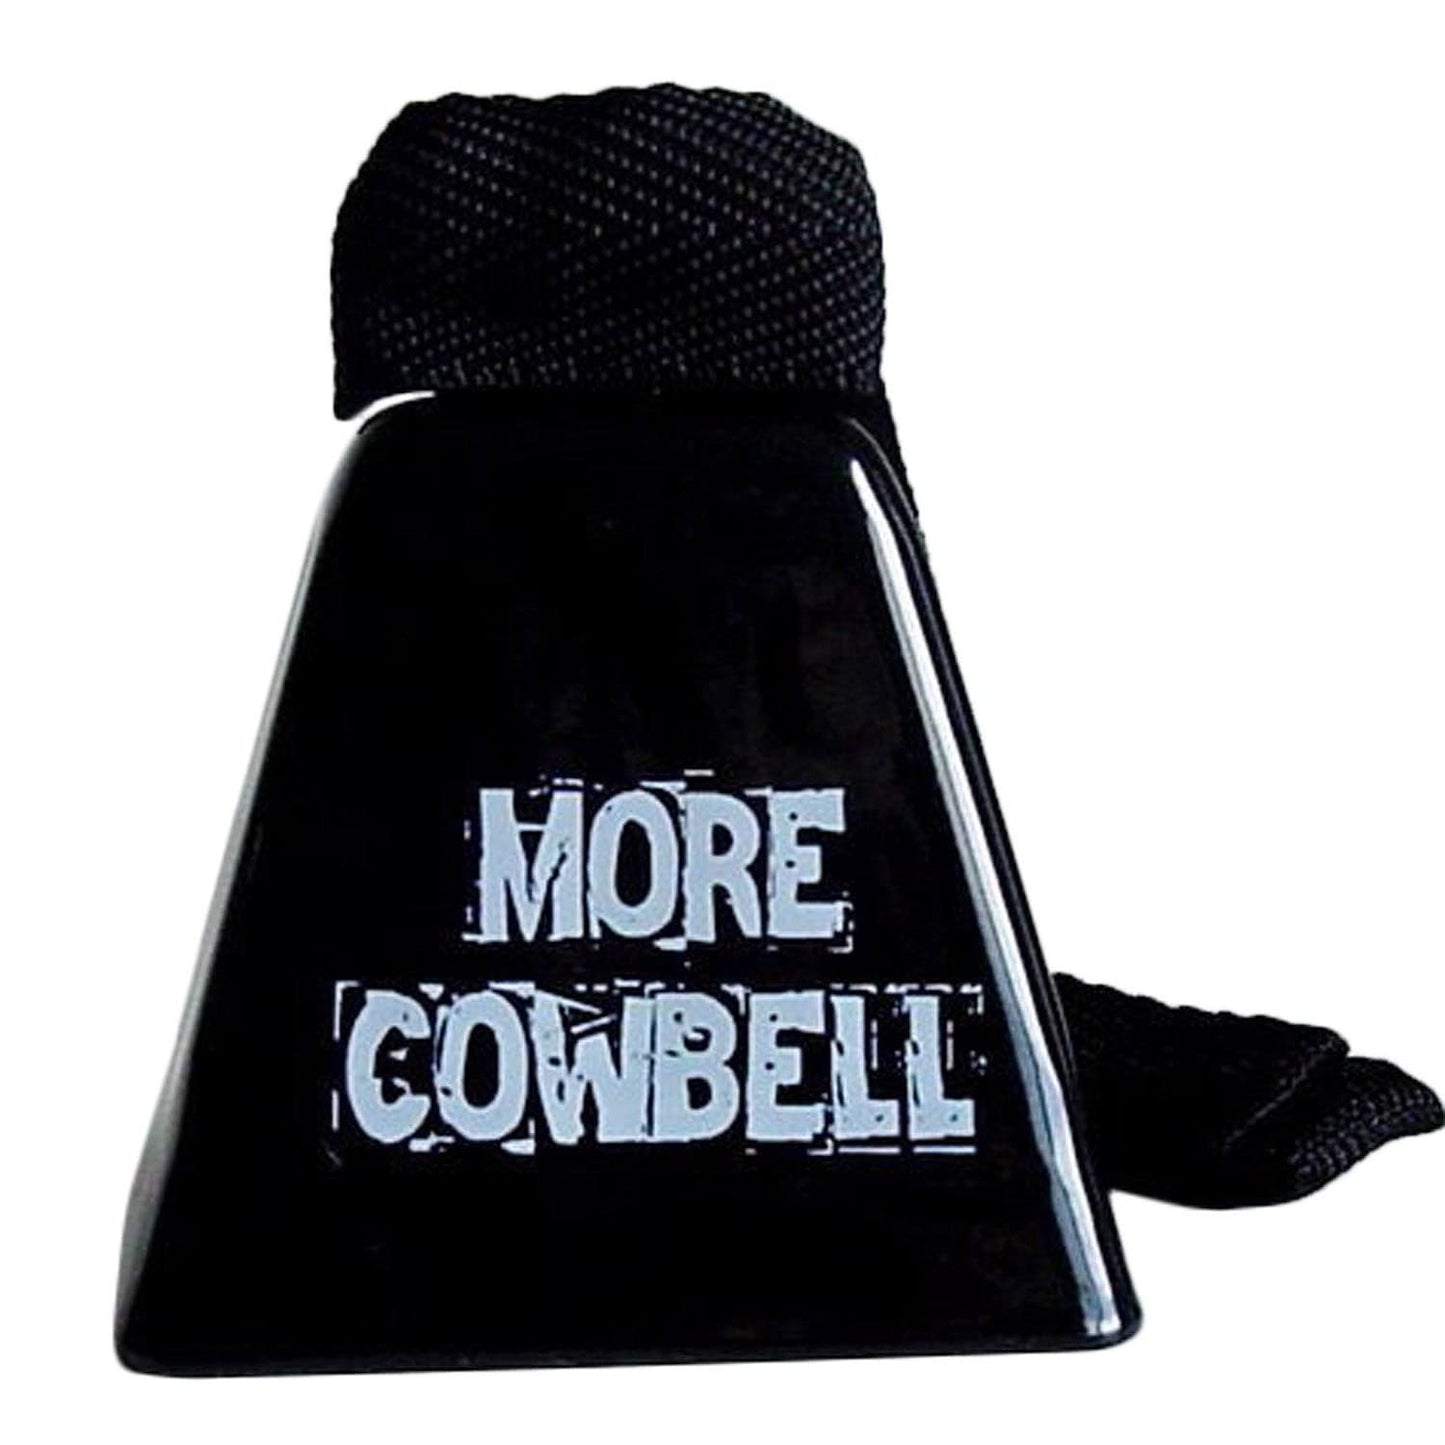 "More Cowbell" SNL Skit Bell